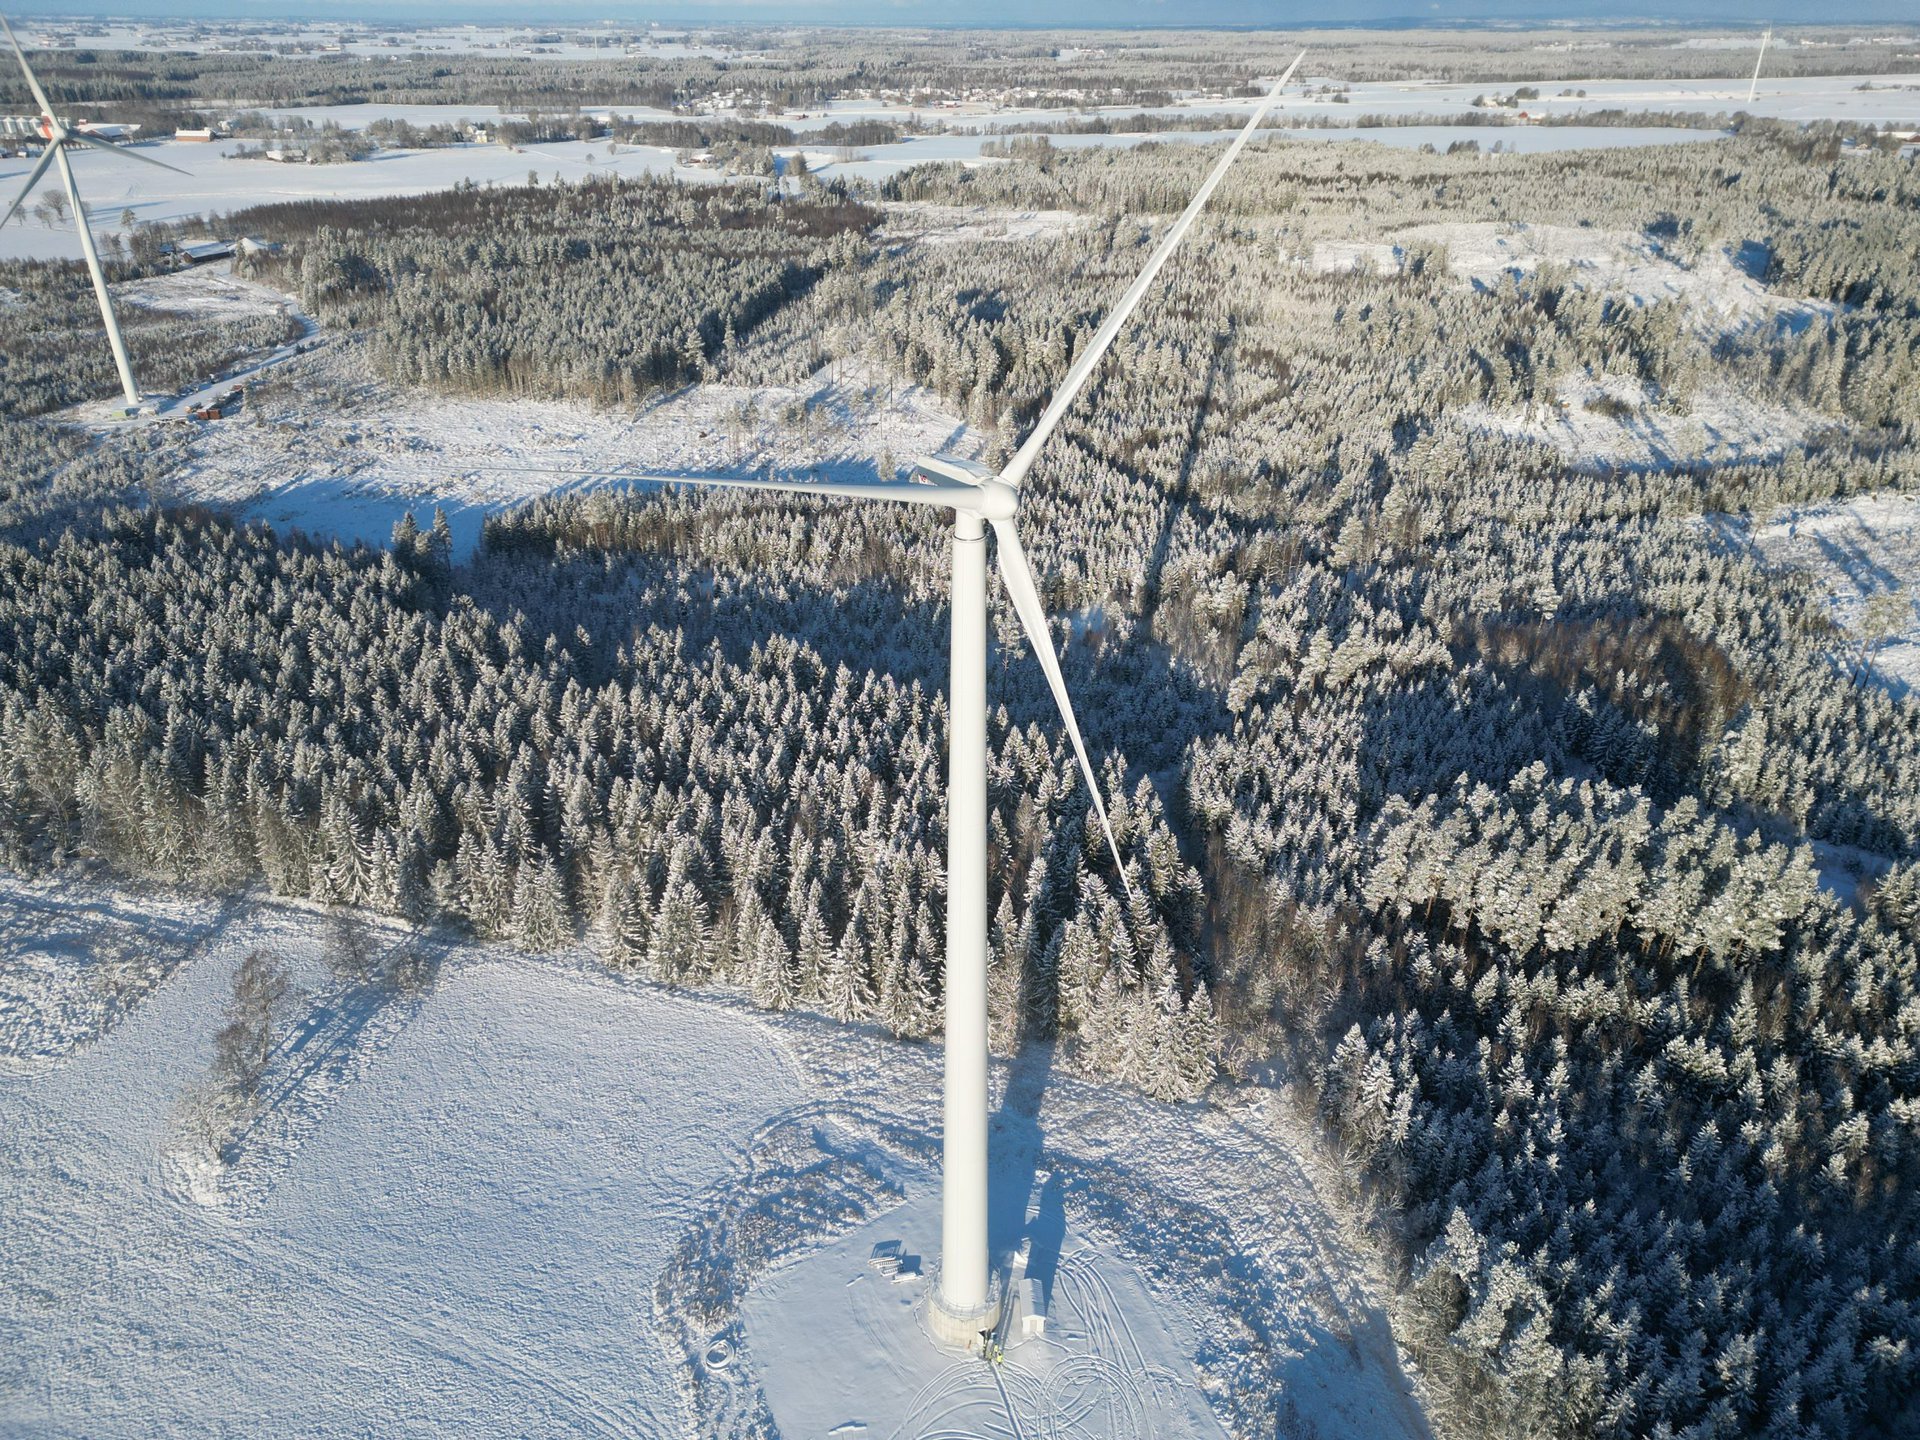 Wooden wind turbines operating in Sweden